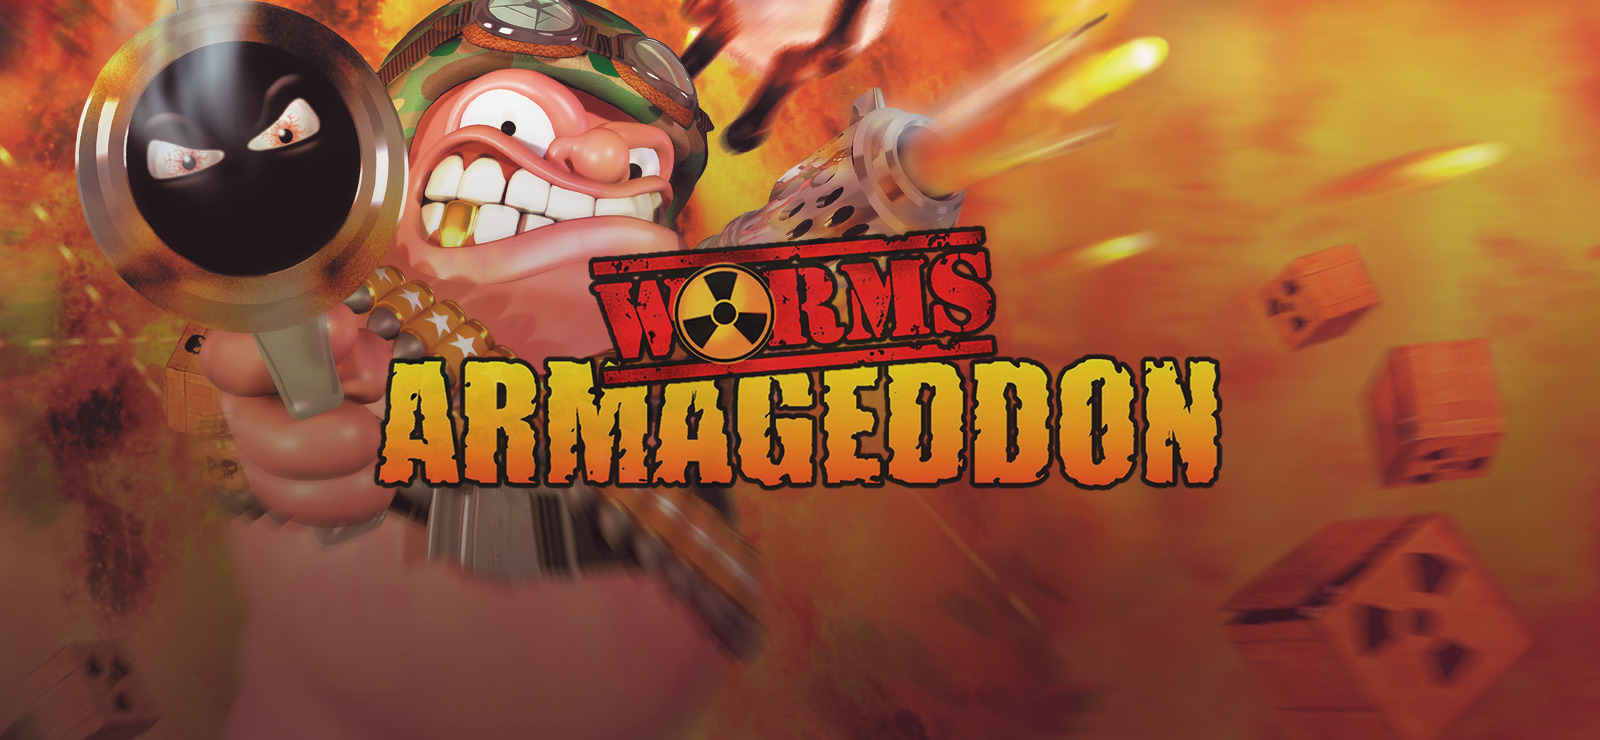 worms armageddon free full download